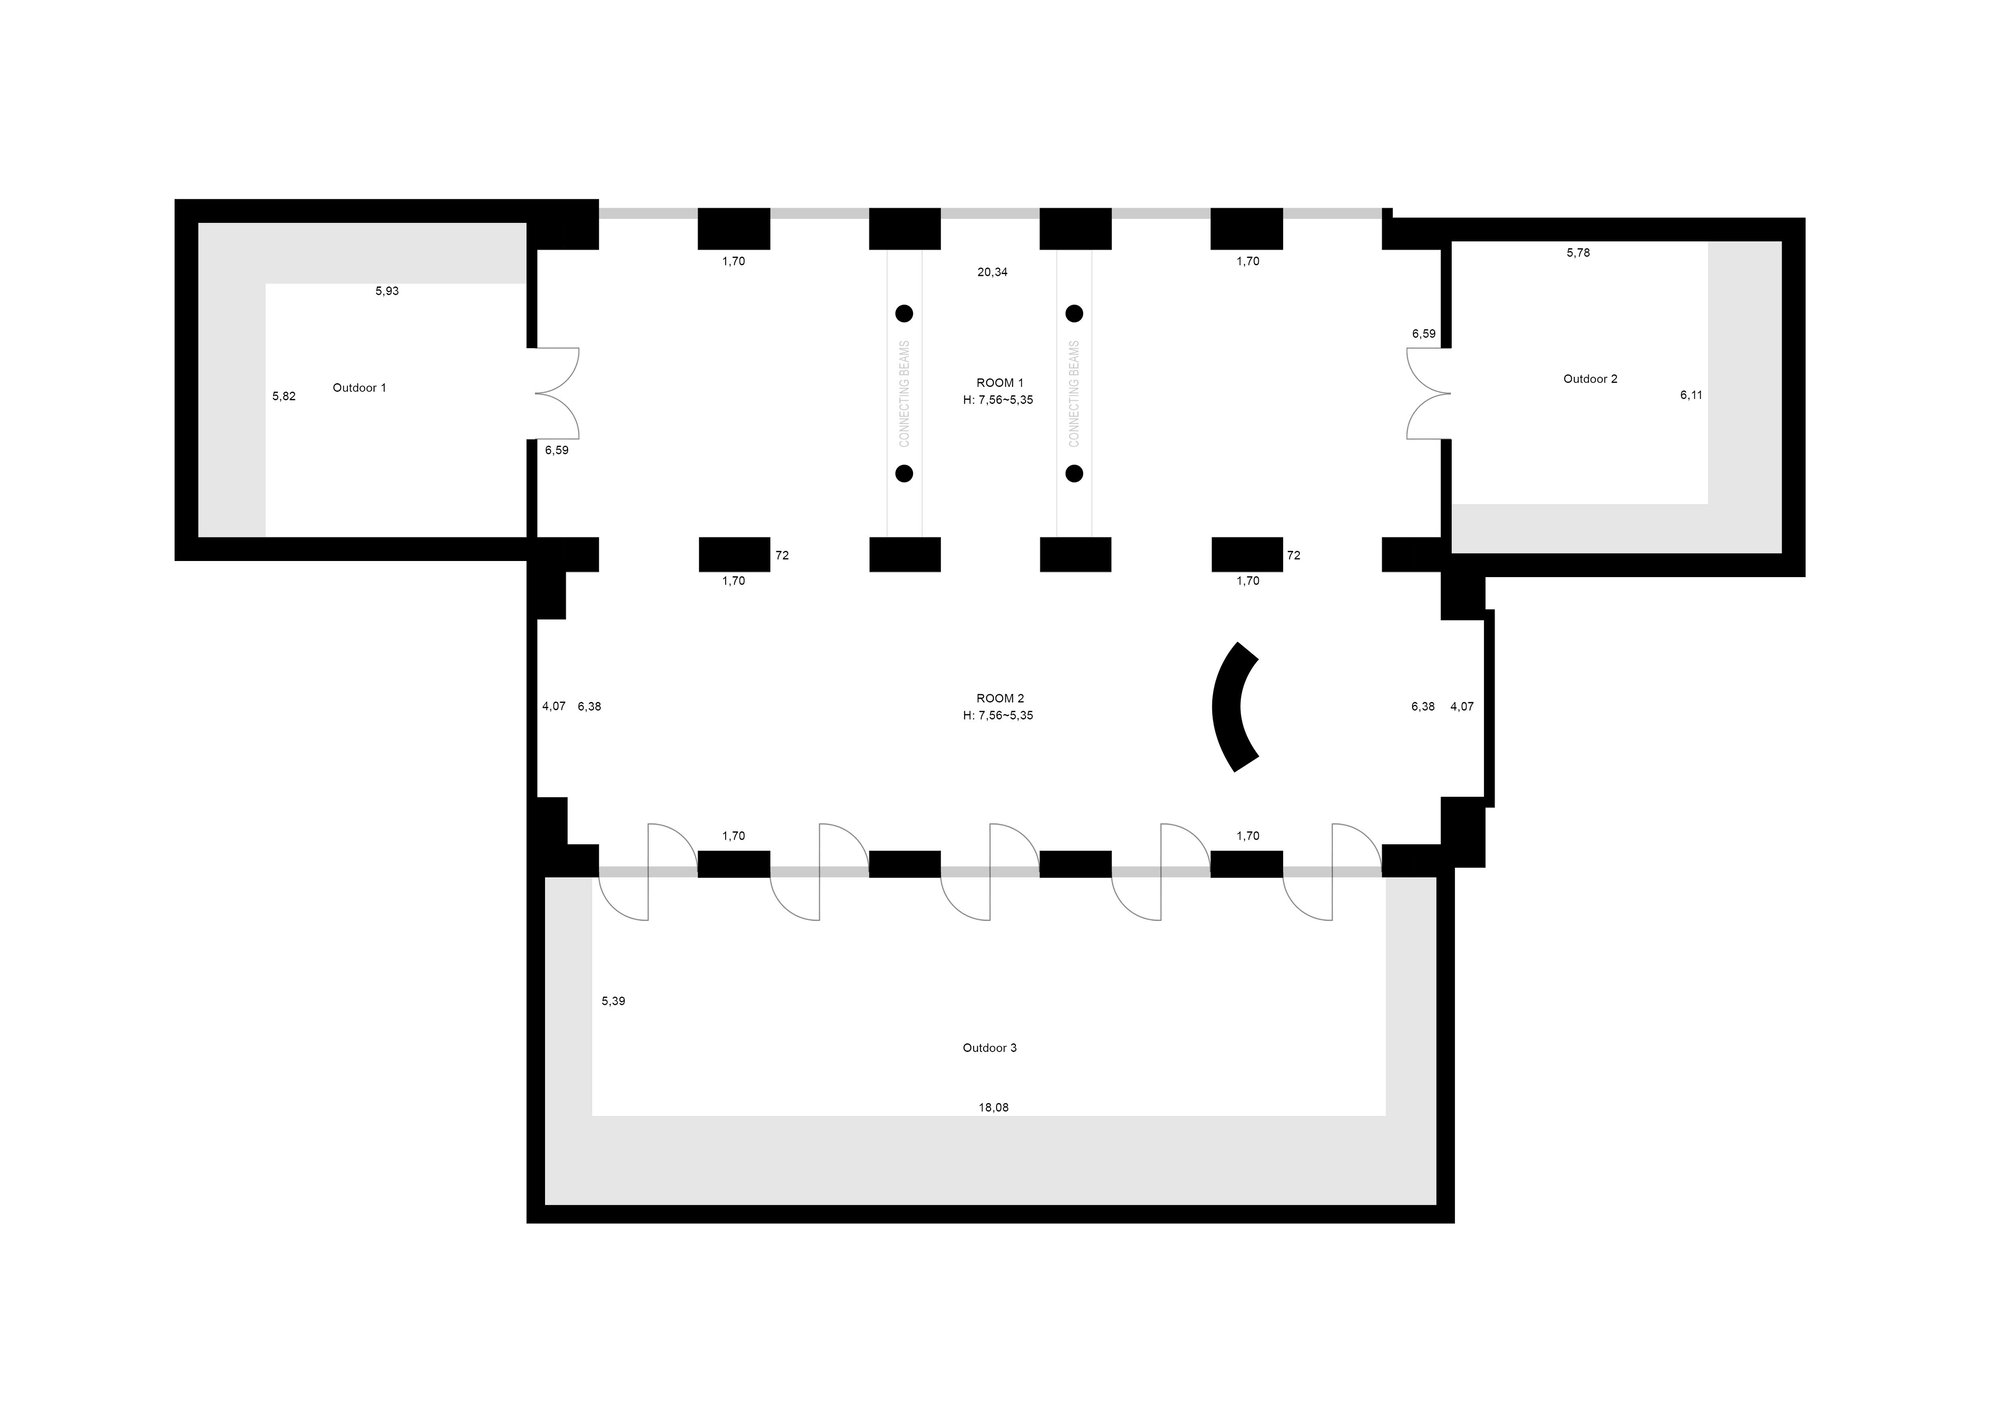 Location_09_Floorplan